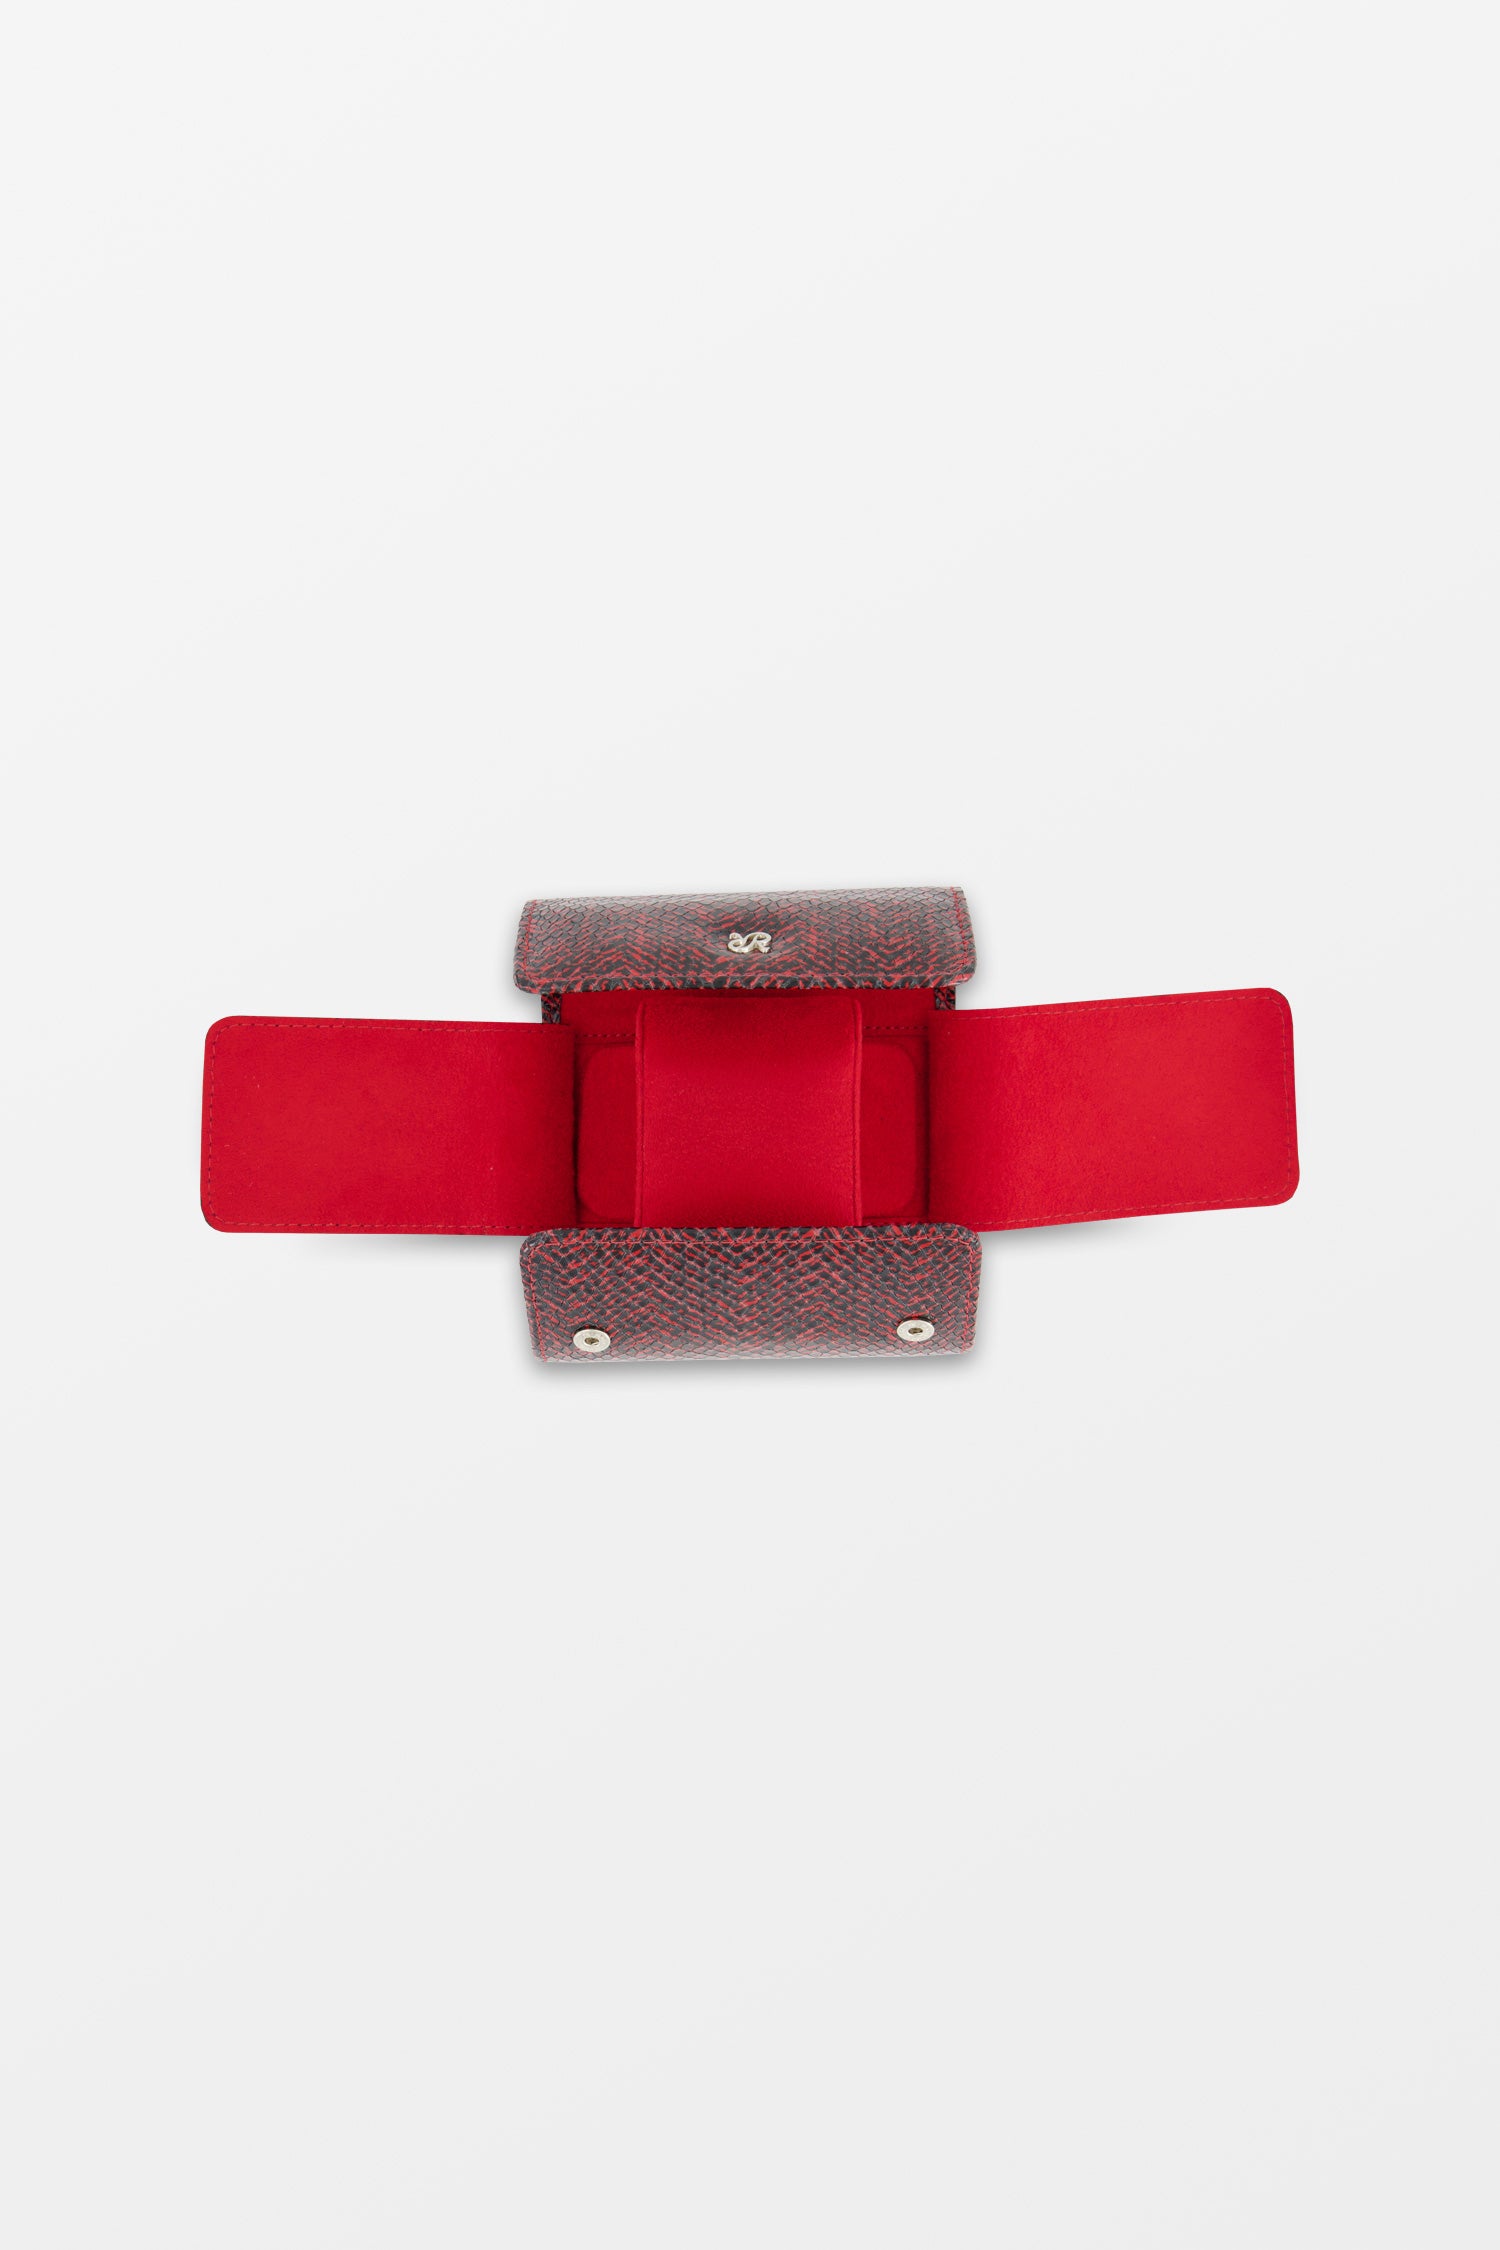 Rapport Marlow Watch Roll in Red Herringbone Leather